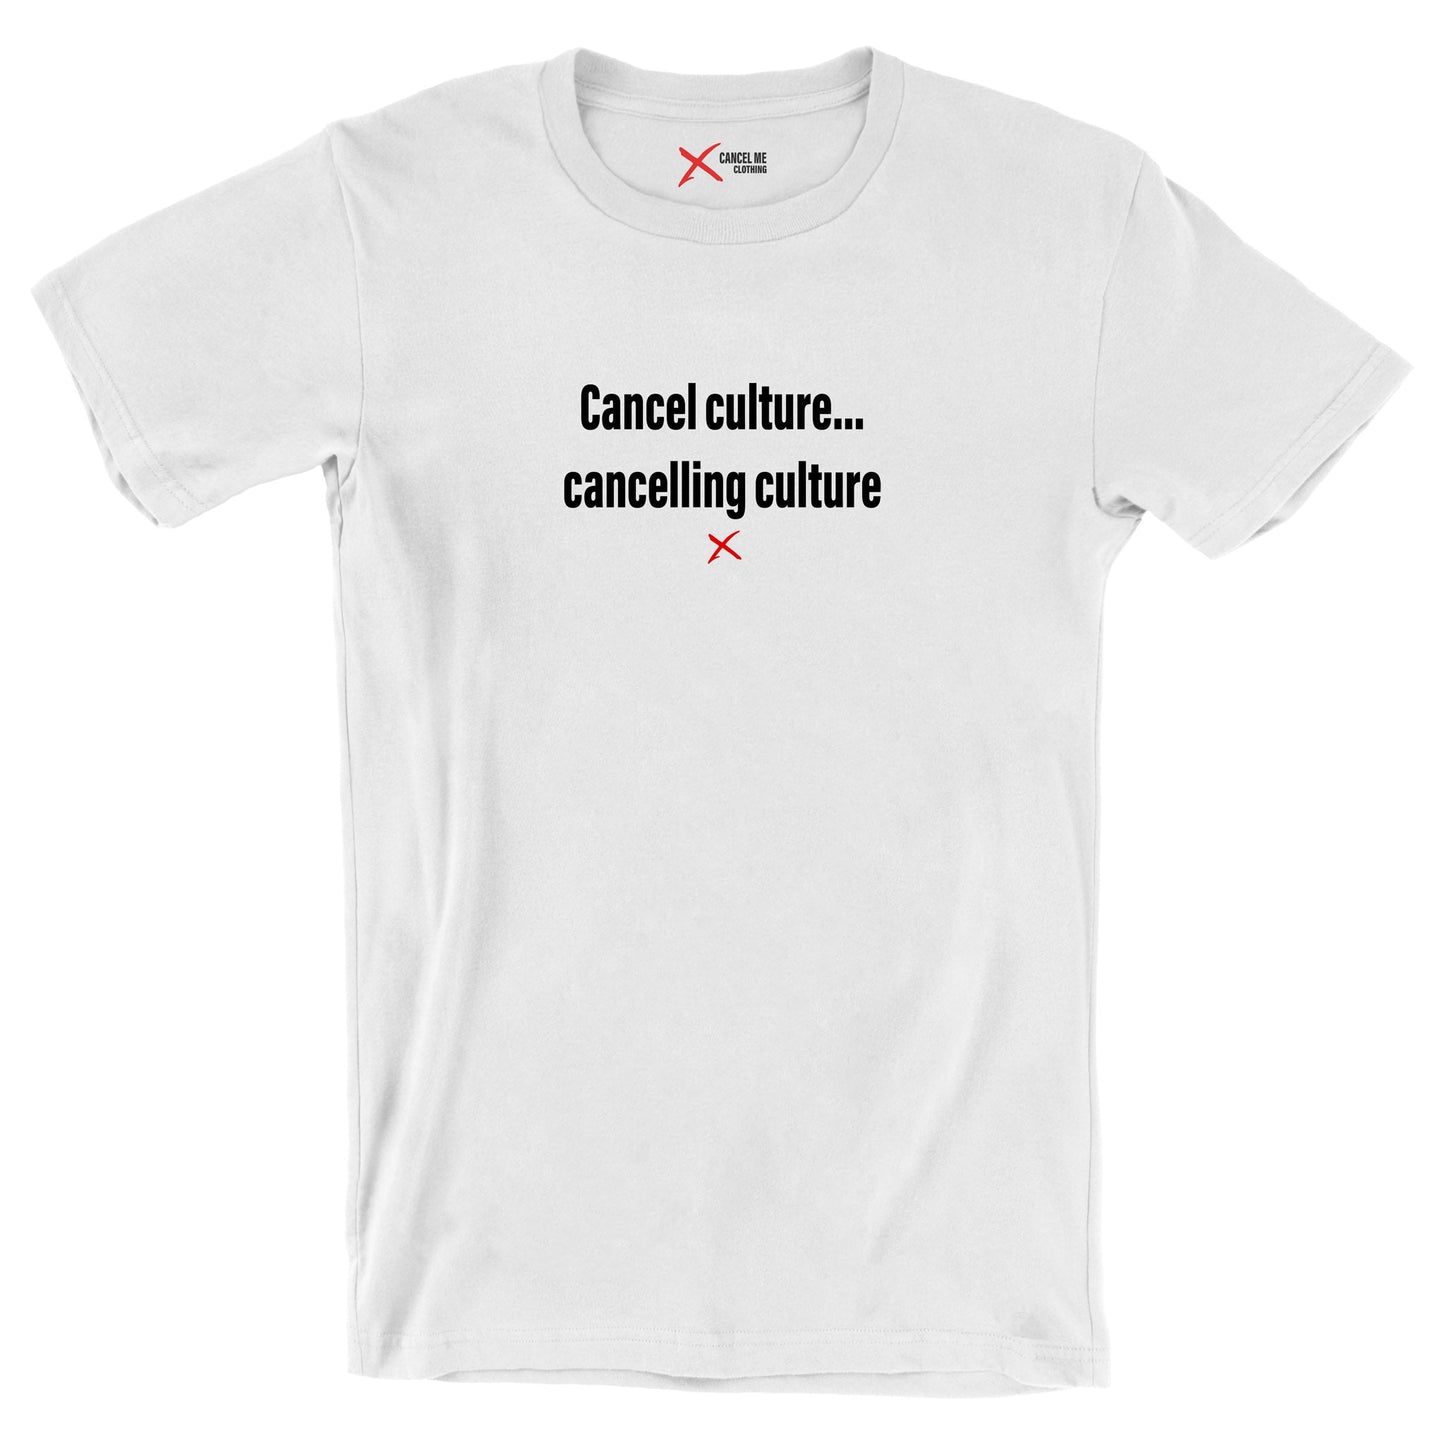 Cancel culture... cancelling culture - Shirt